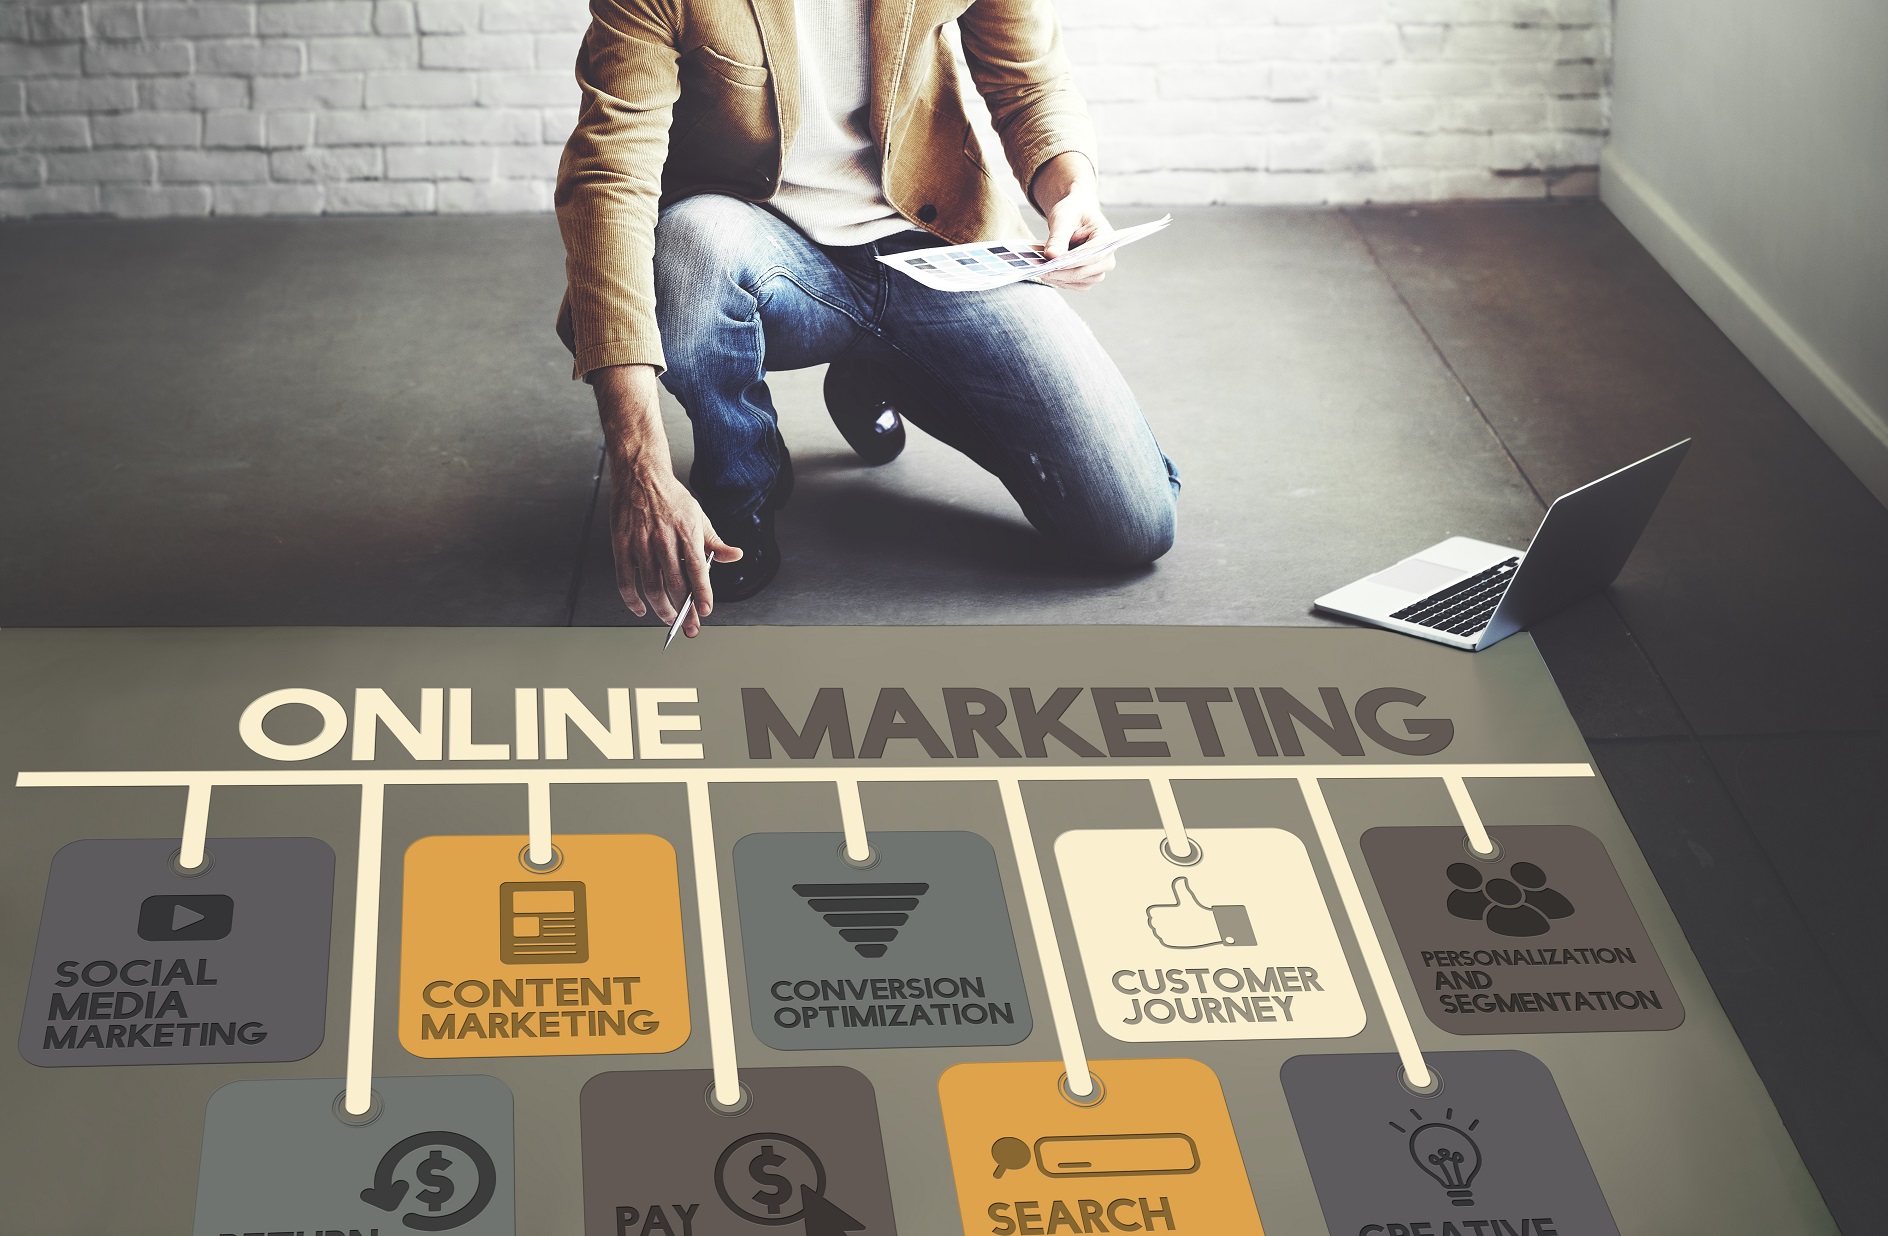 Online Marketing trends